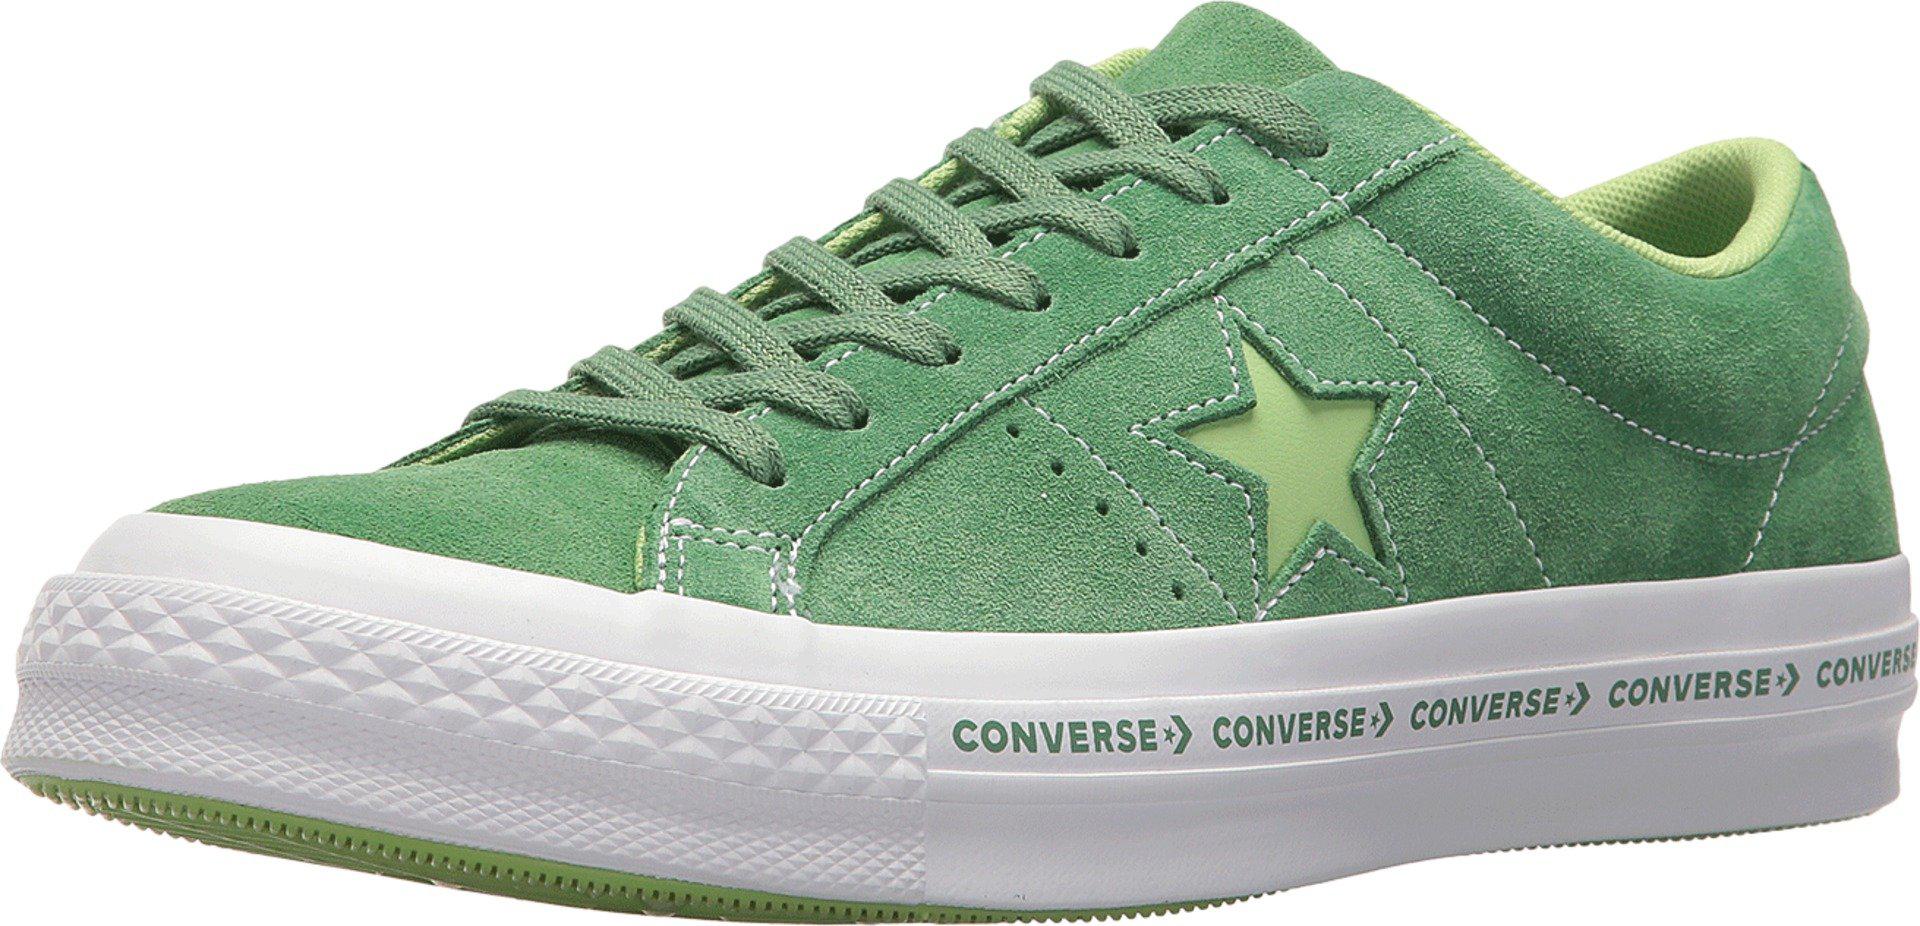 converse one star mint green